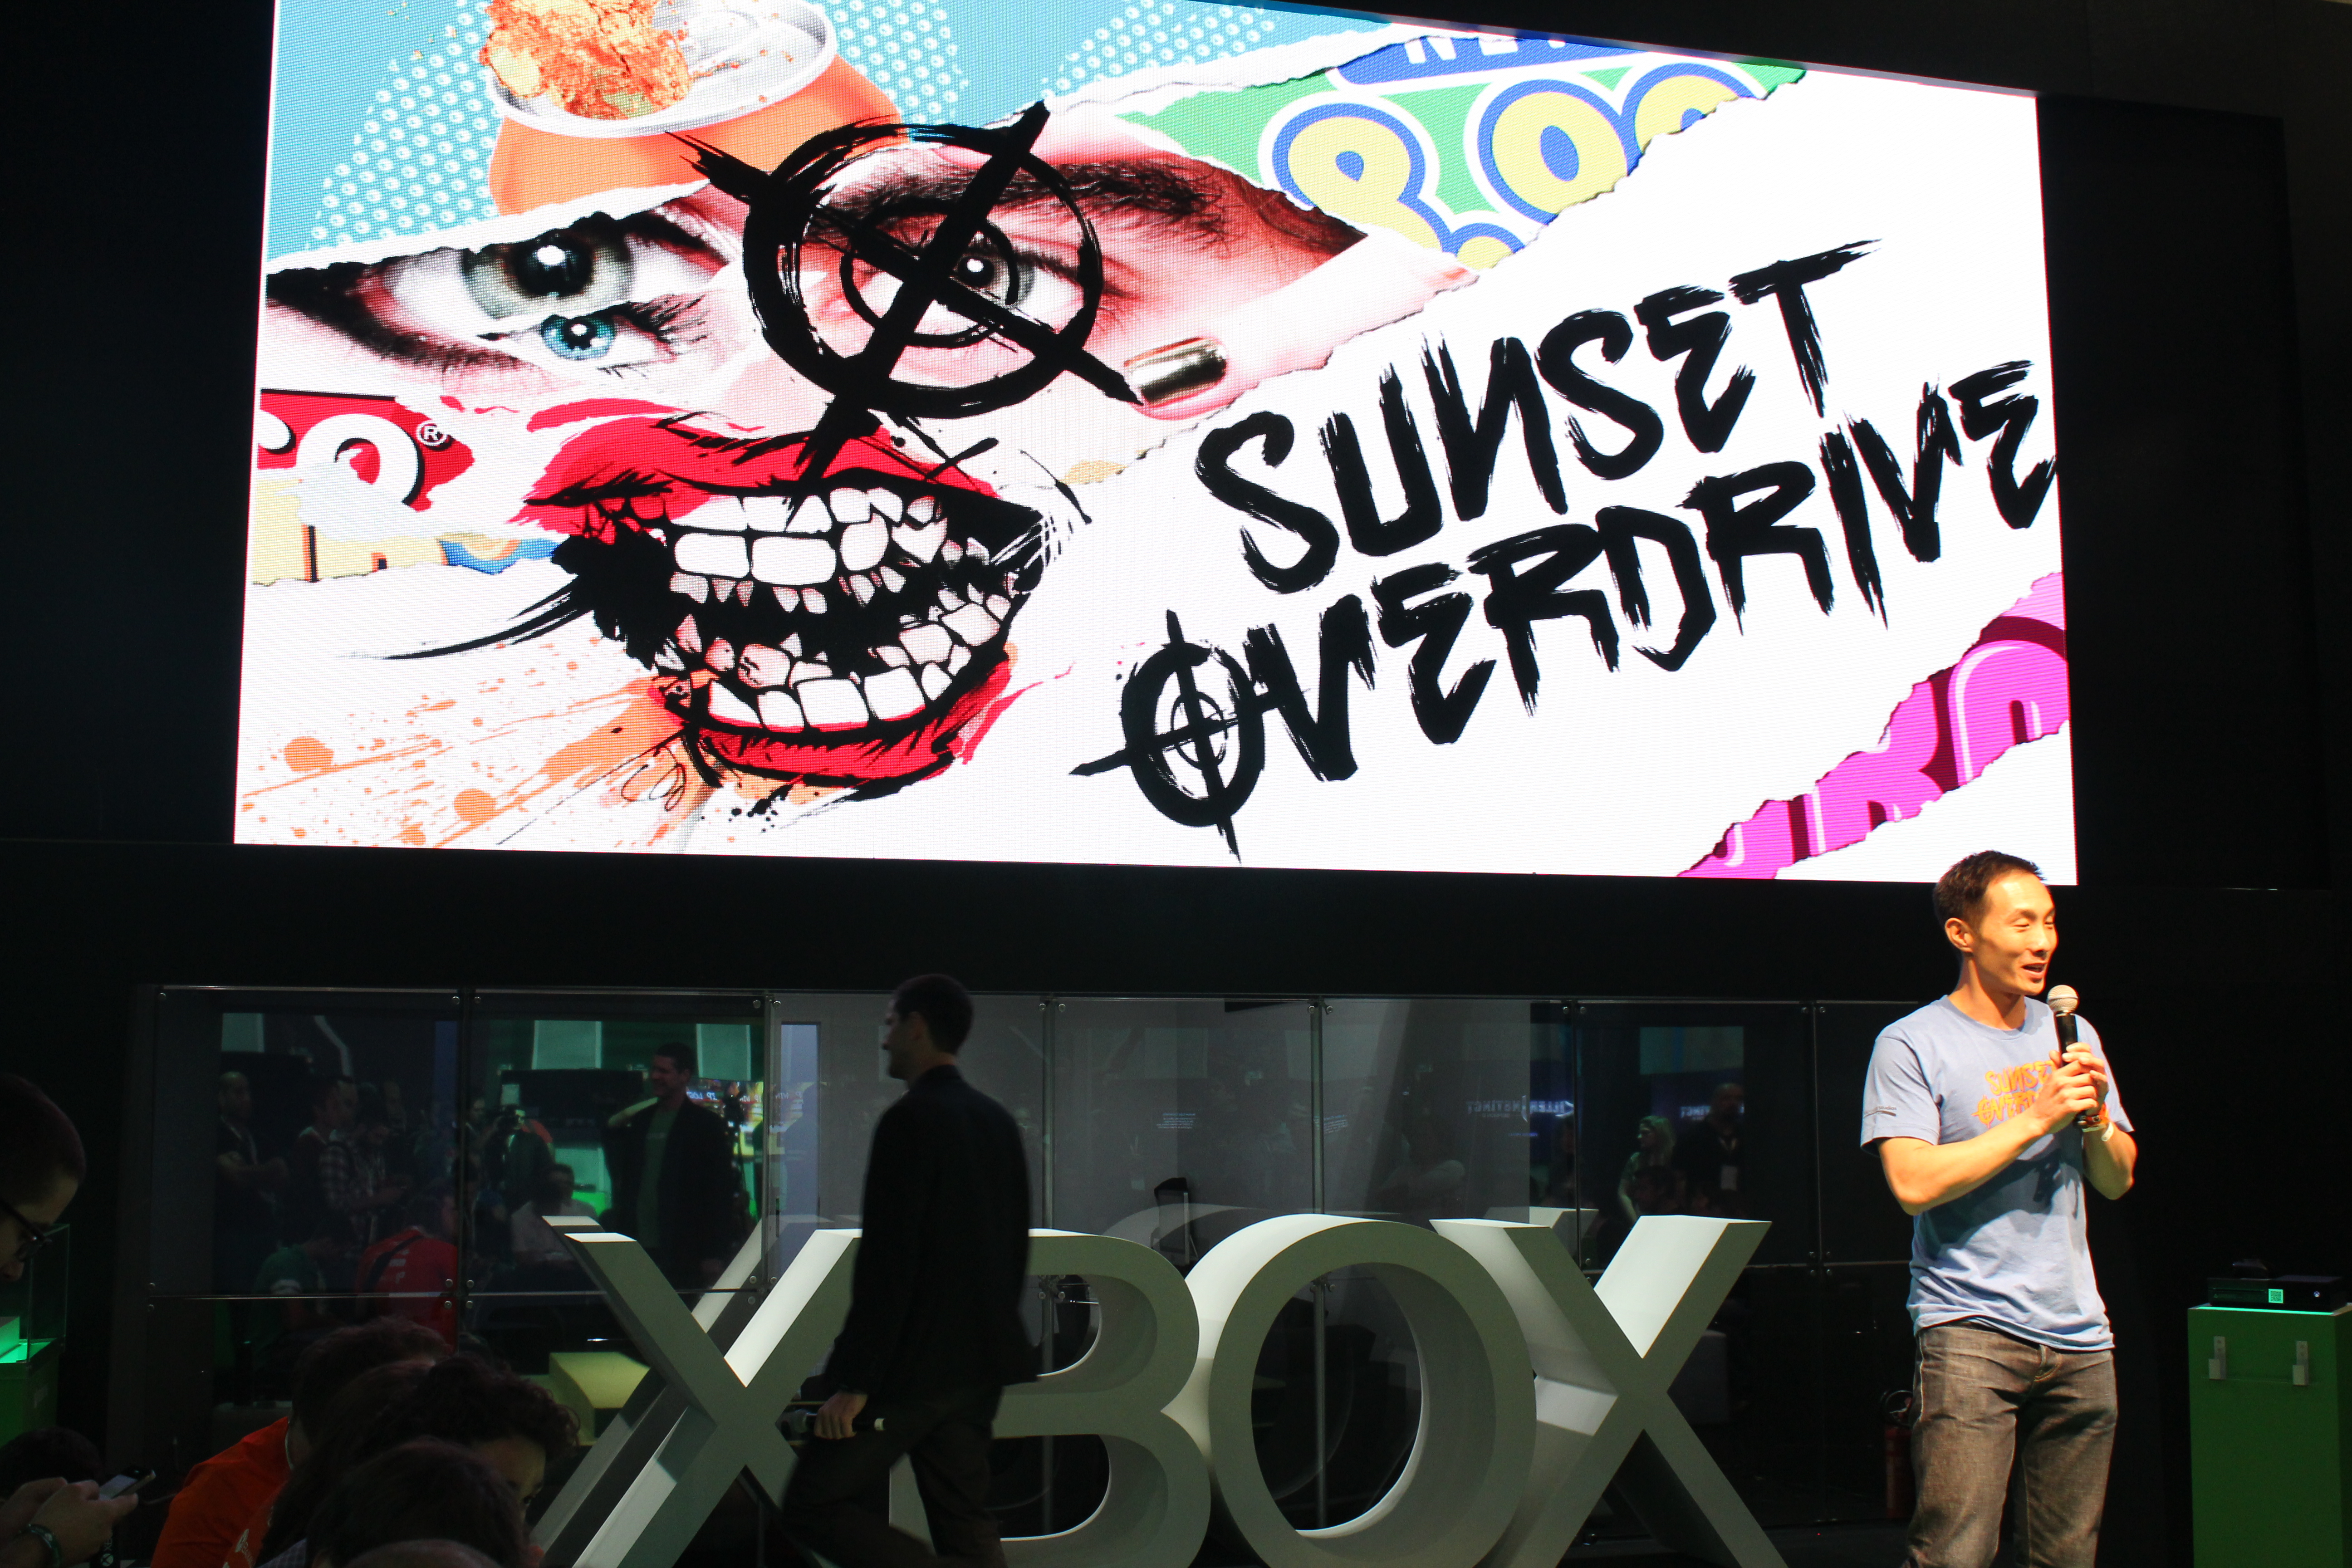 PlayStation registou o nome Sunset Overdrive